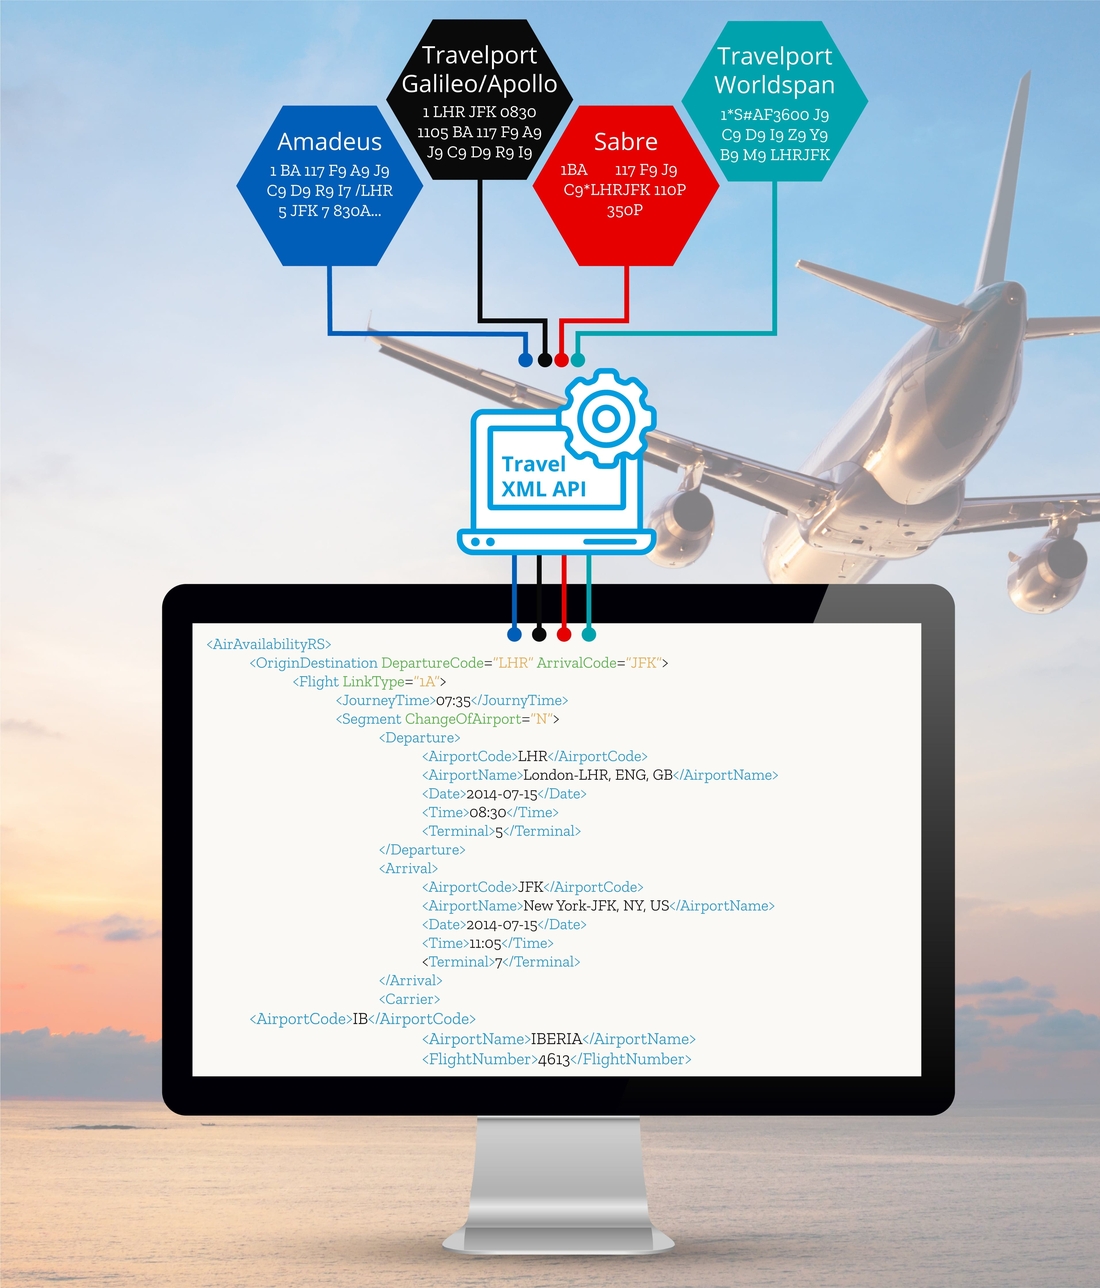 The Travel XML API tool offers uniform access to multi GDS such as Amadeus, Travelport (Galileo/Apollo, Worldspan) and Sabre via XML